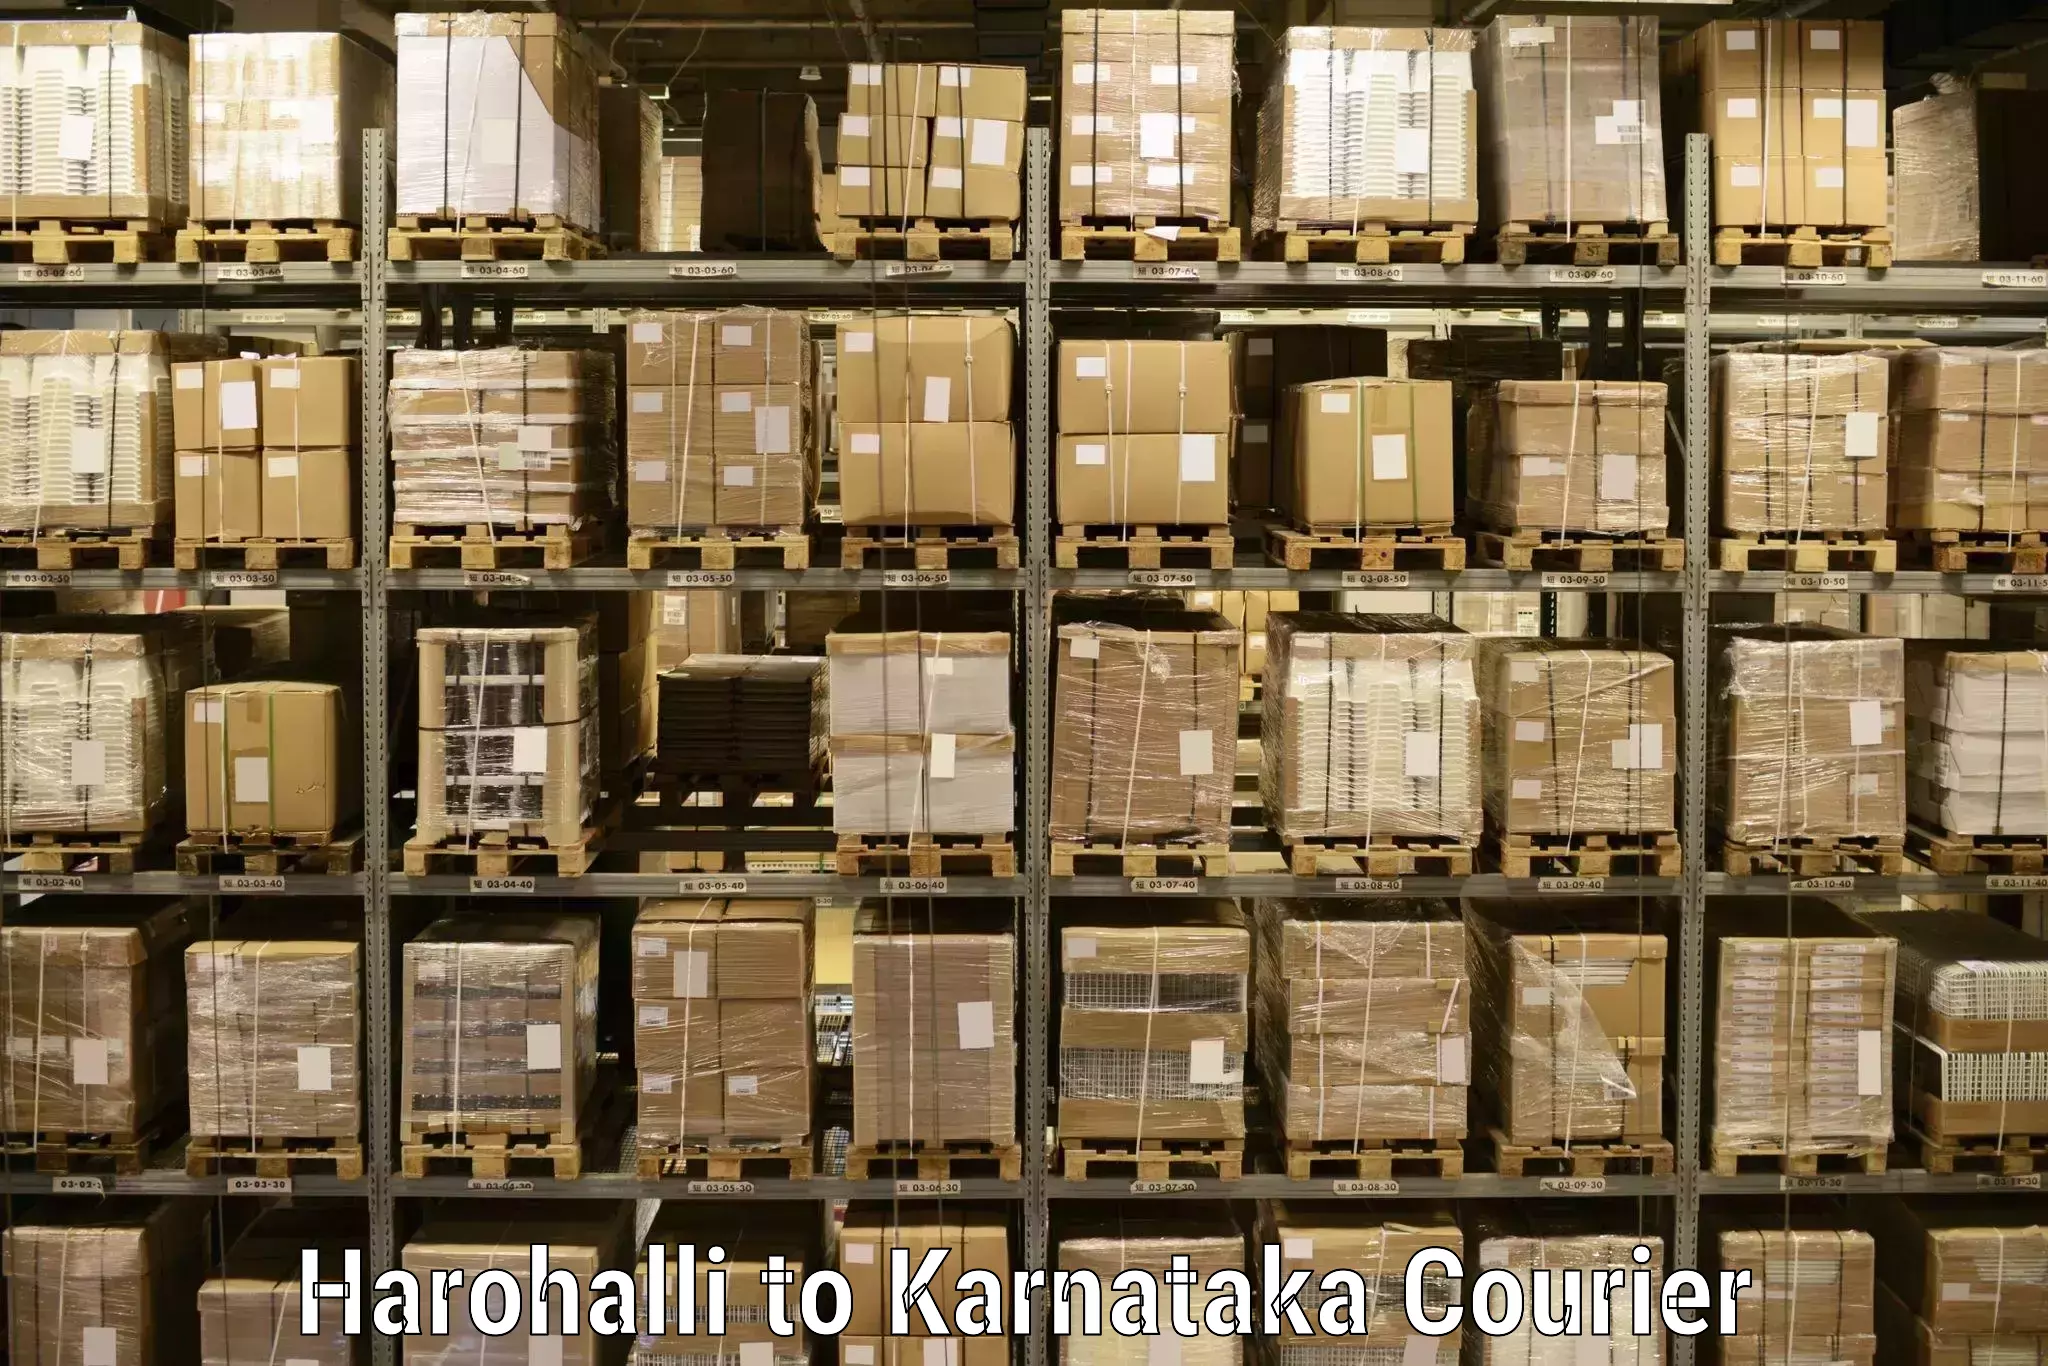 State-of-the-art courier technology in Harohalli to Karnataka